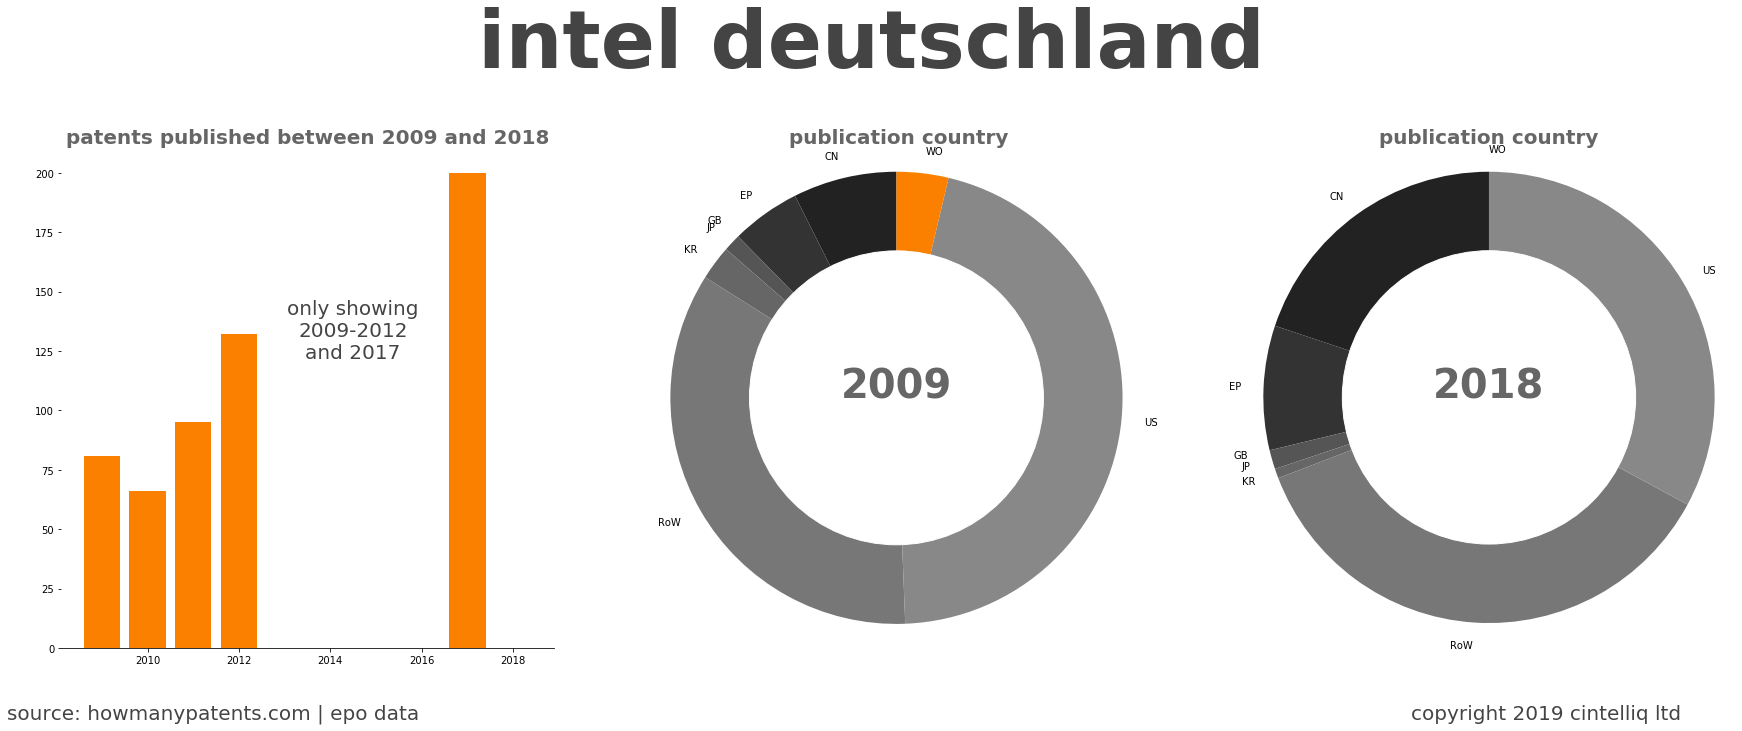 summary of patents for Intel Deutschland